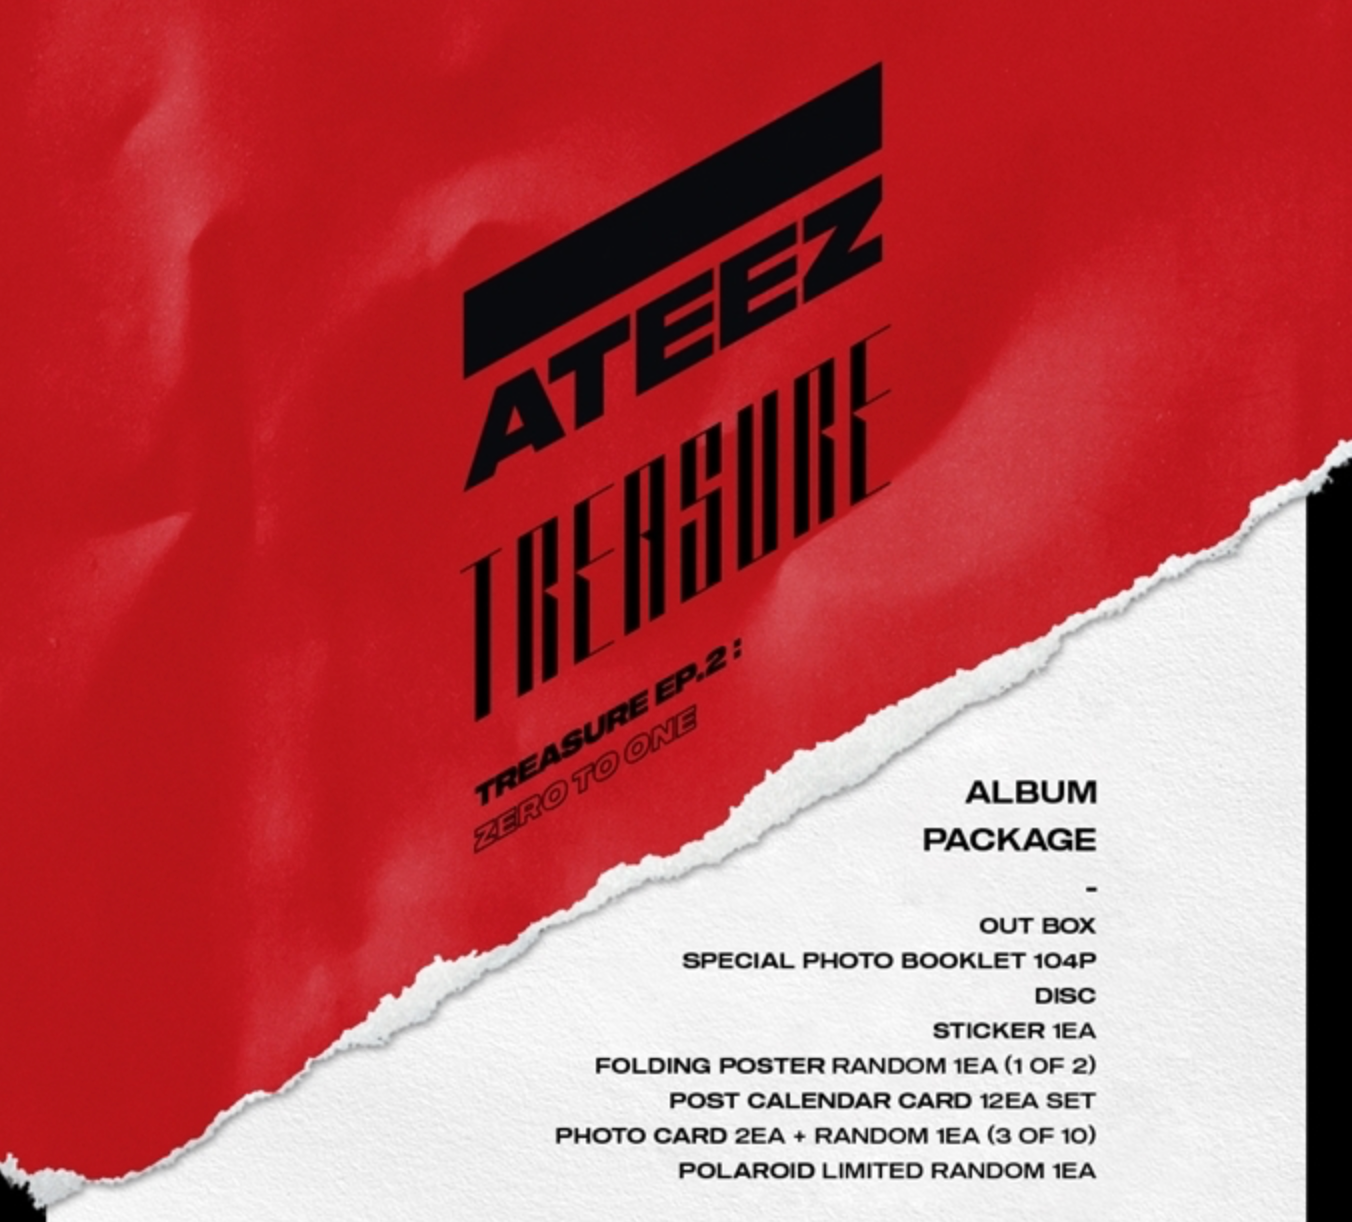 ATEEZ 2nd Mini Album "Treasure EP.2: Zero to One"